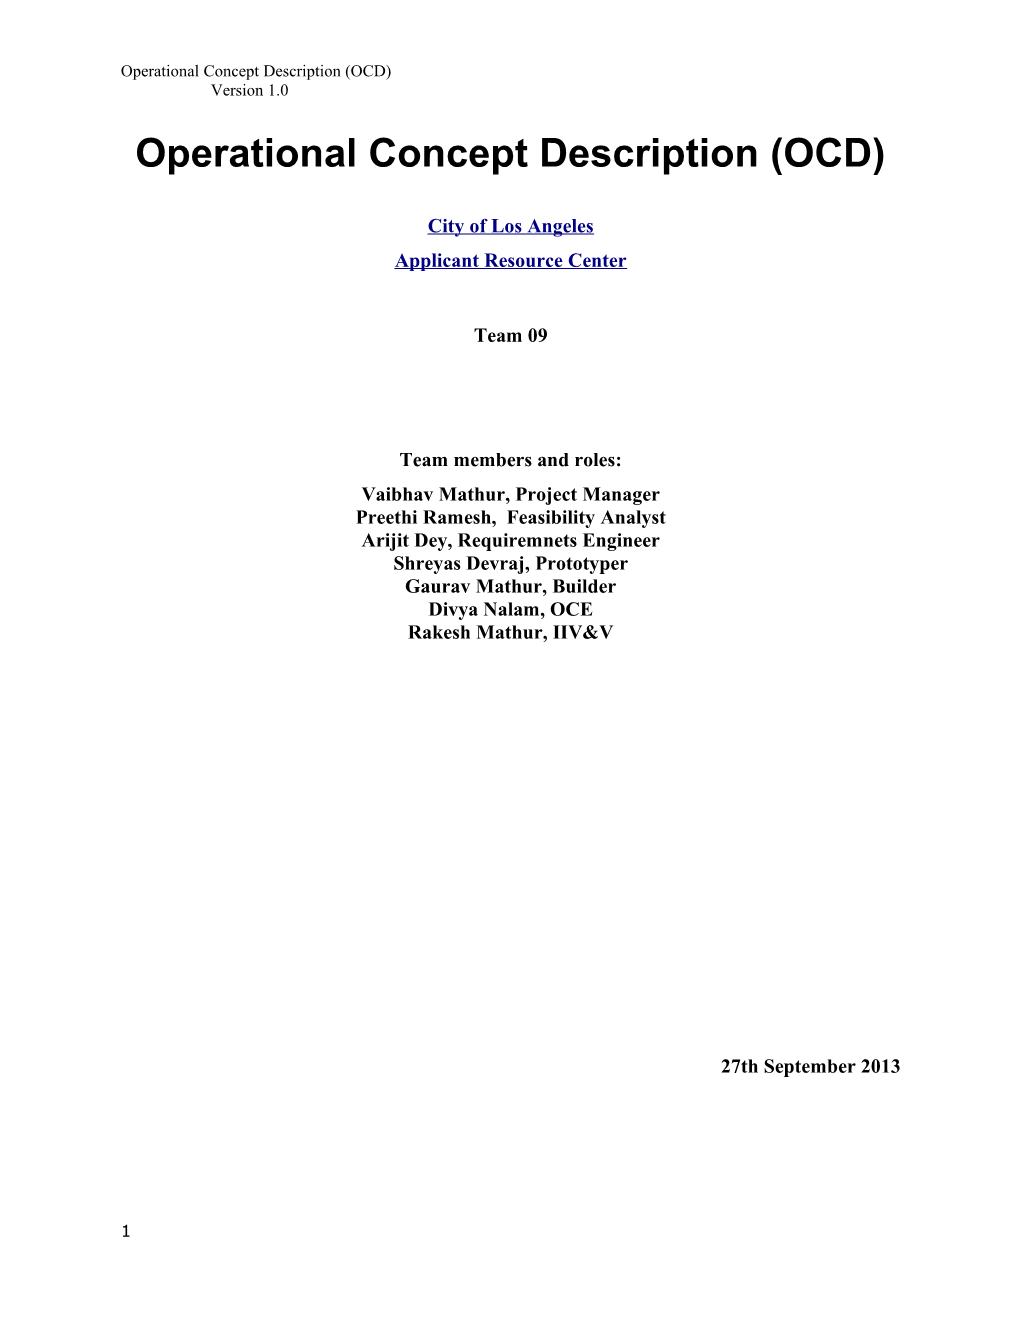 Operational Concept Description (OCD) Version 1.0